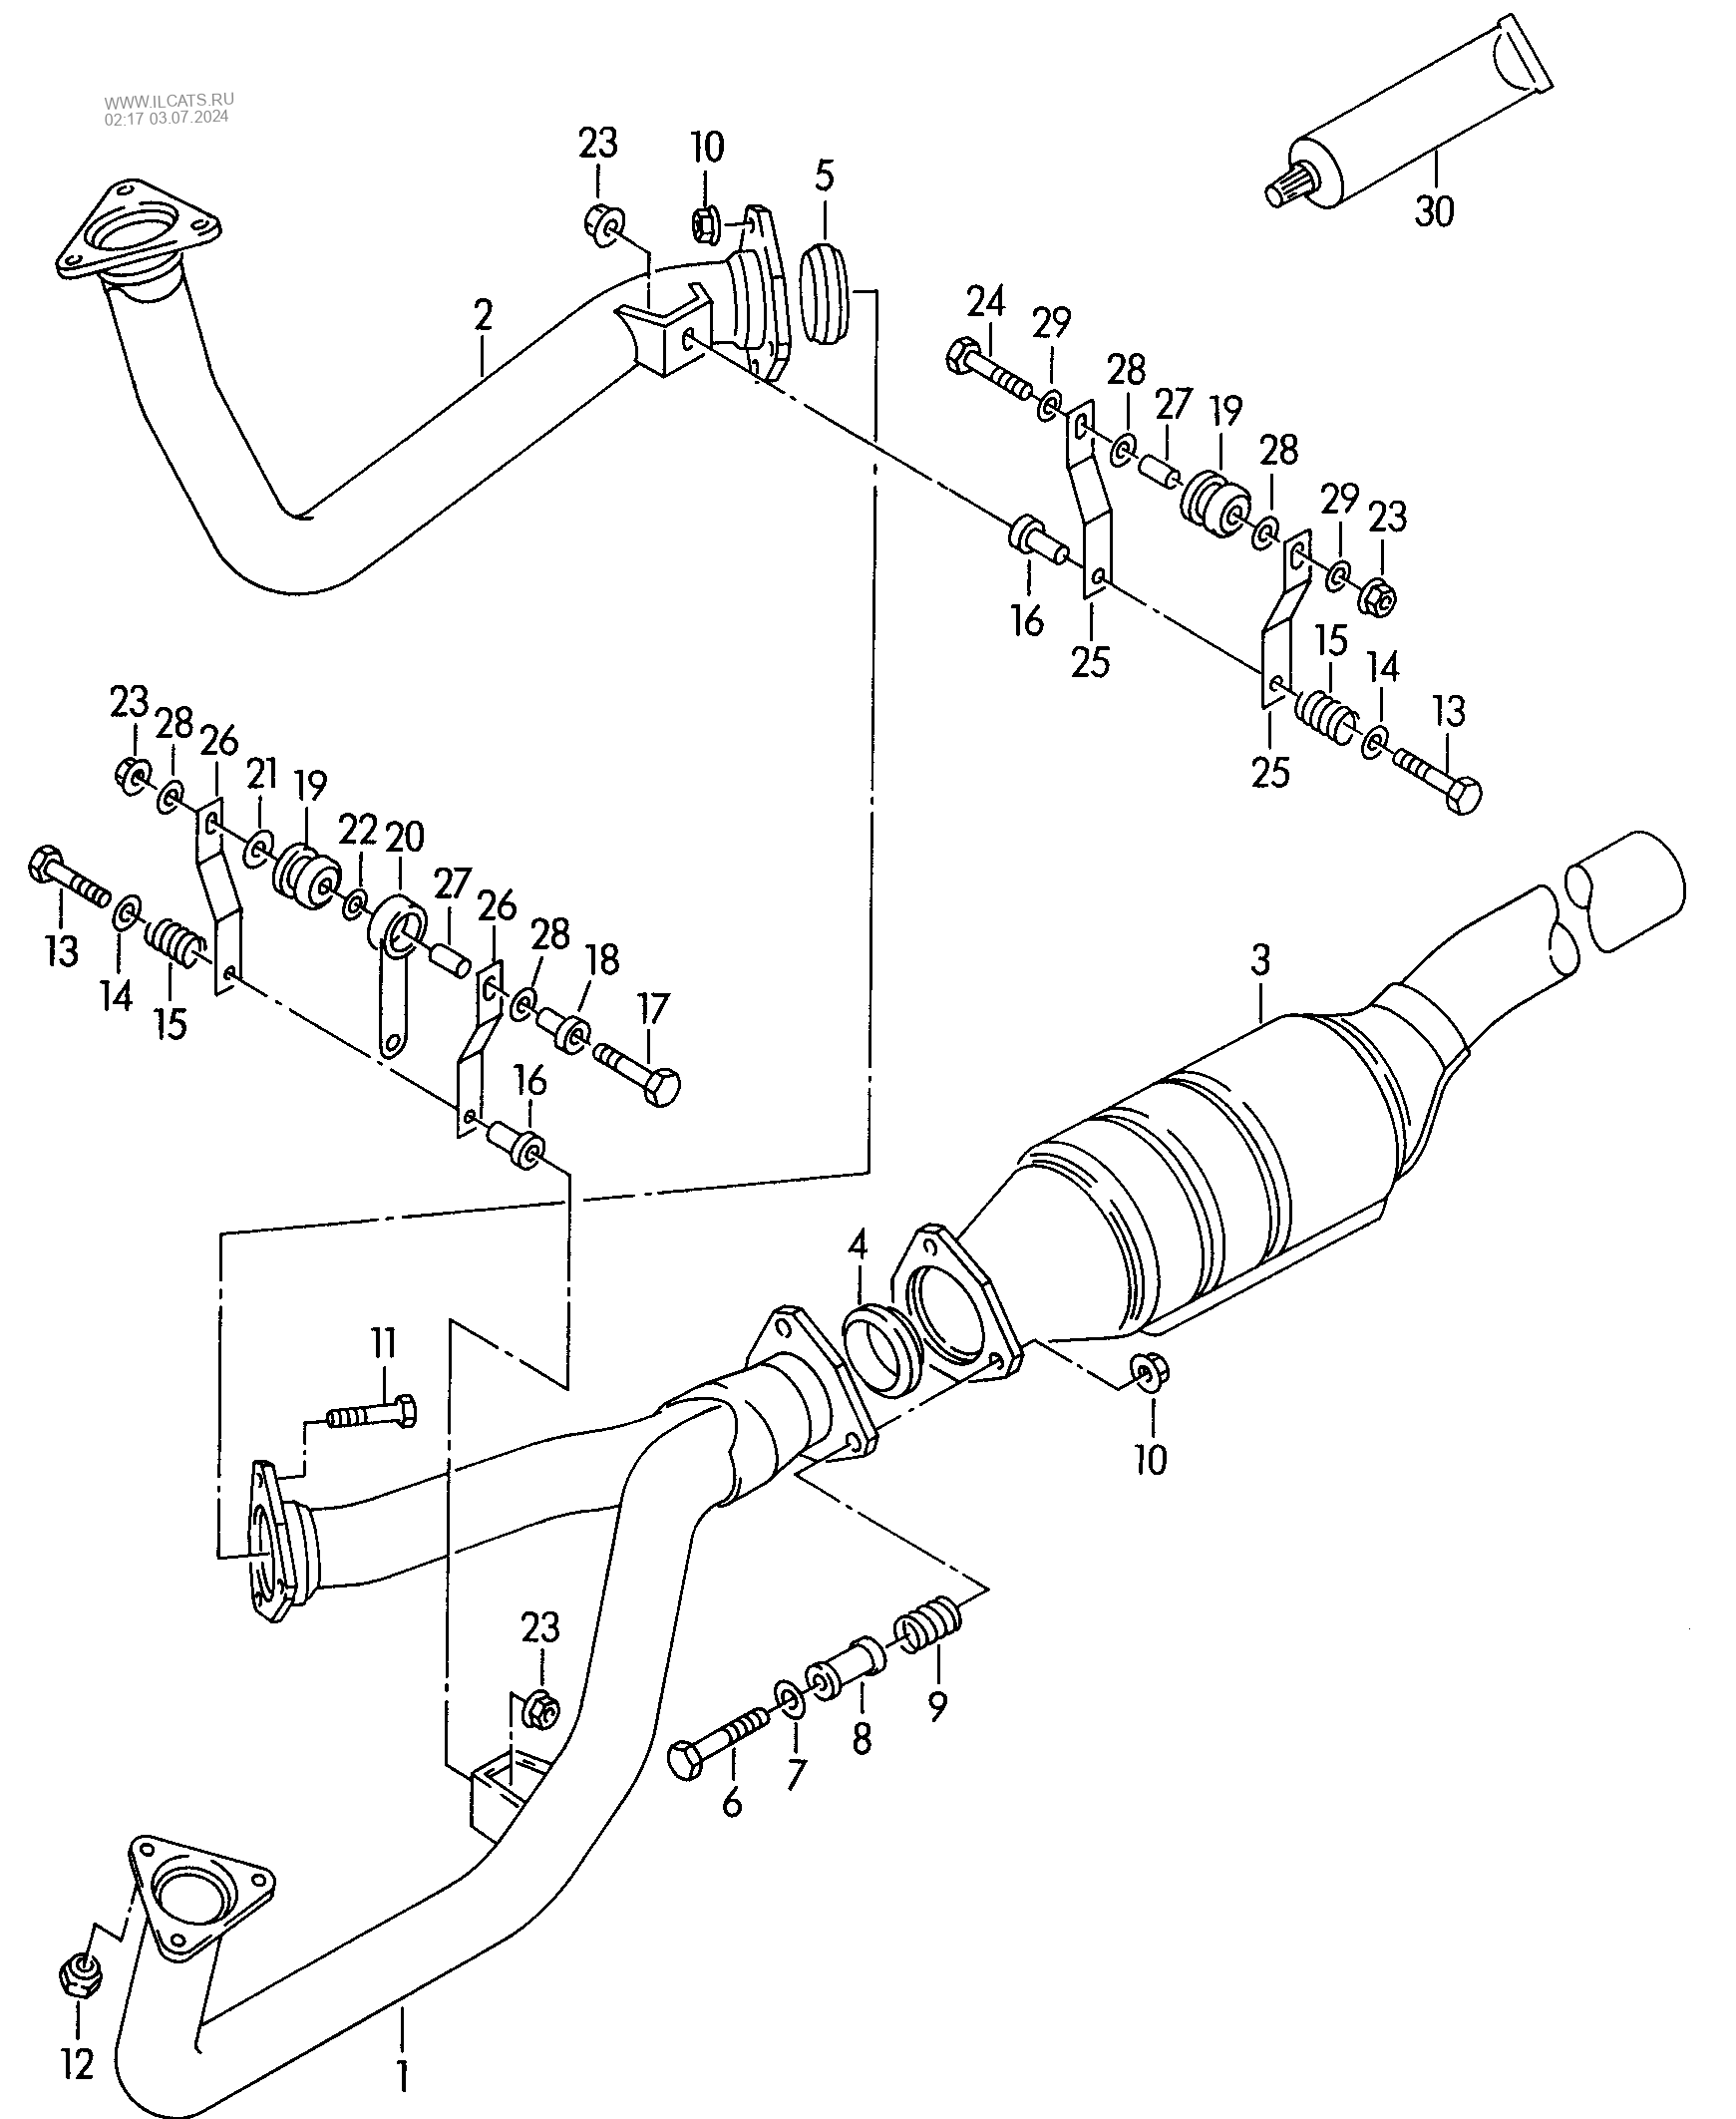 41 nissan frontier exhaust system diagram - Wiring Diagram